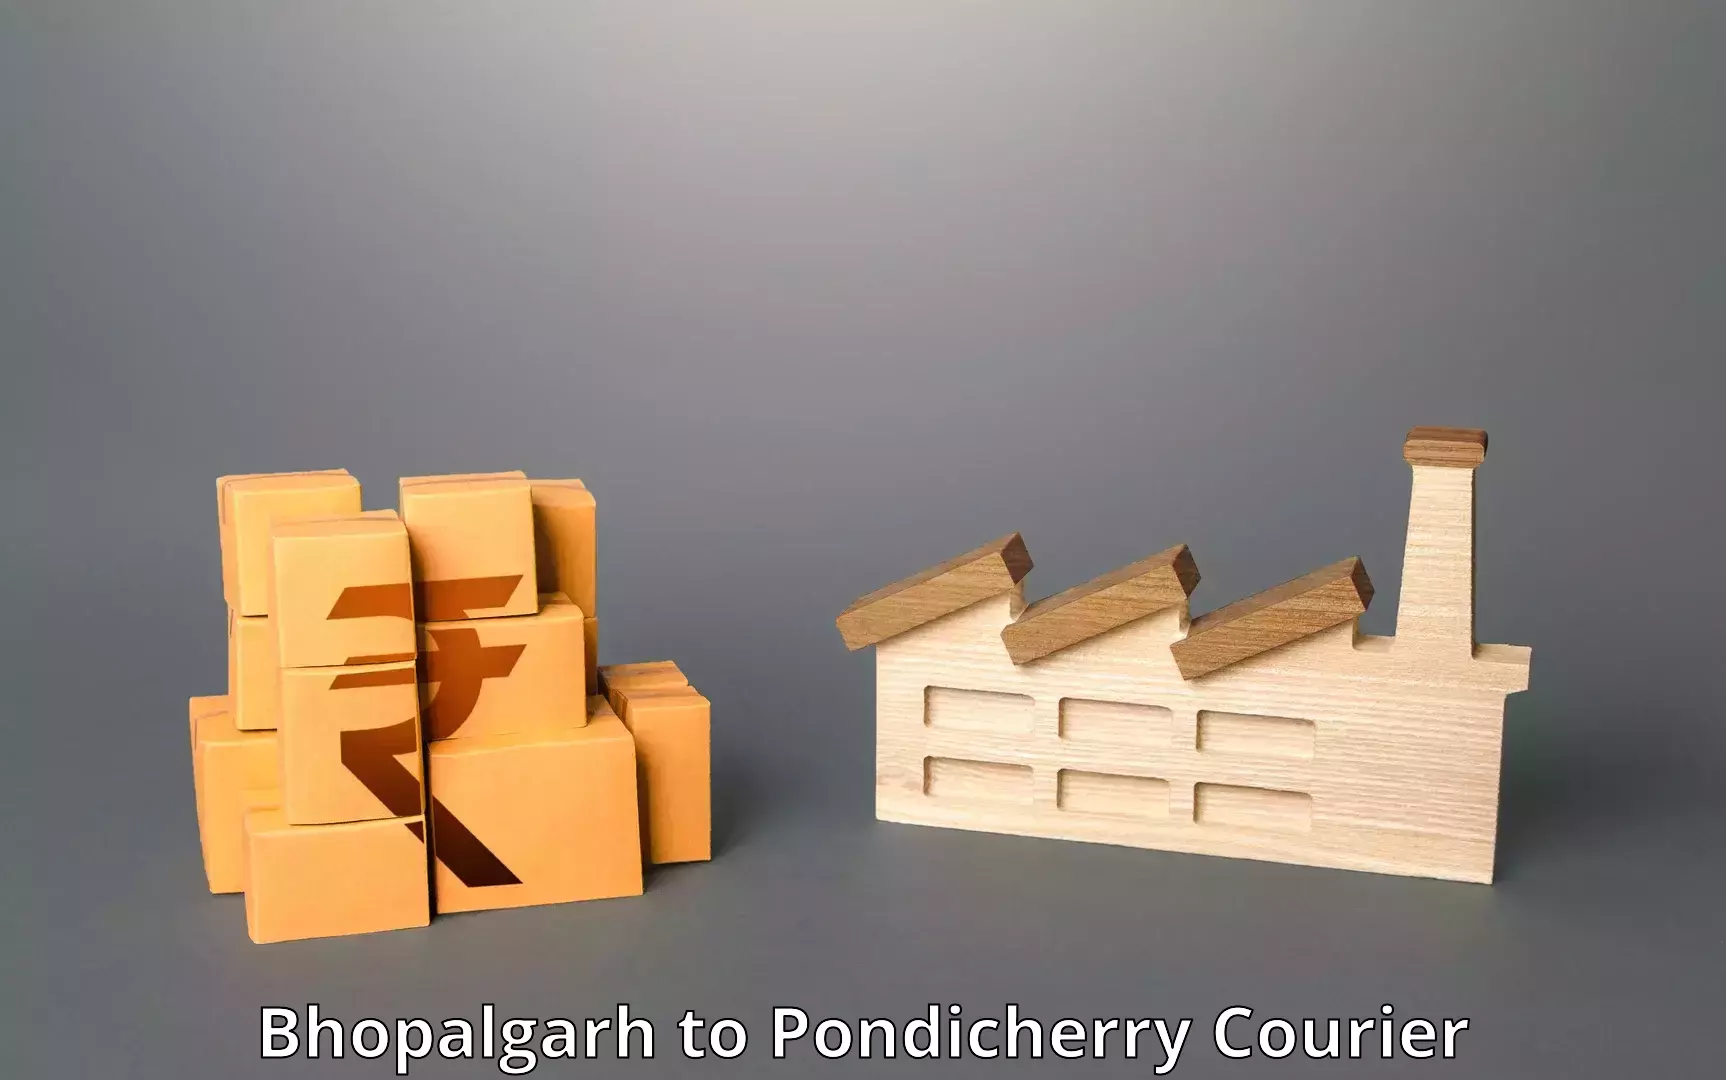 High-performance logistics Bhopalgarh to Pondicherry